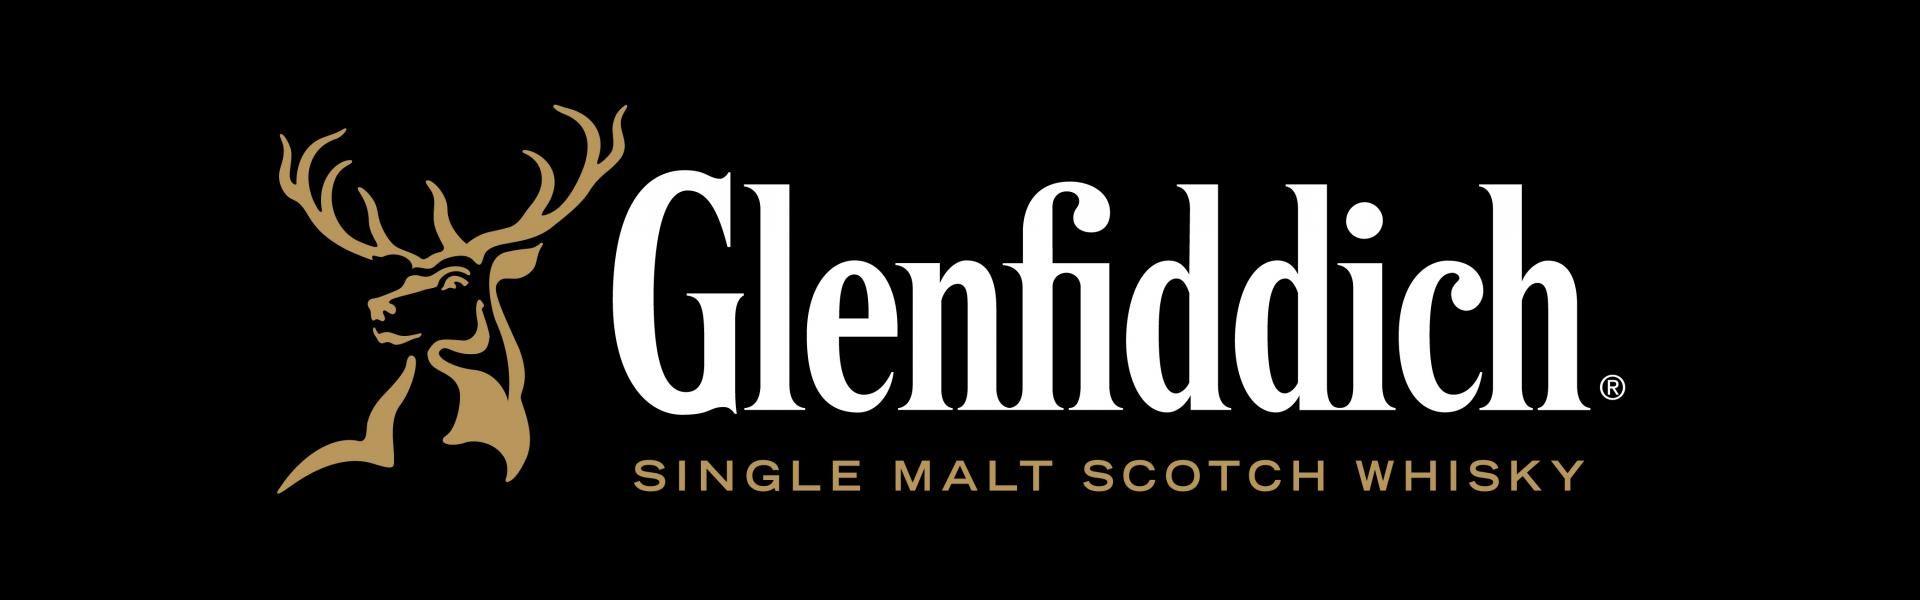 Glenfiddich Logo - Glenfiddich Scotch Whisky